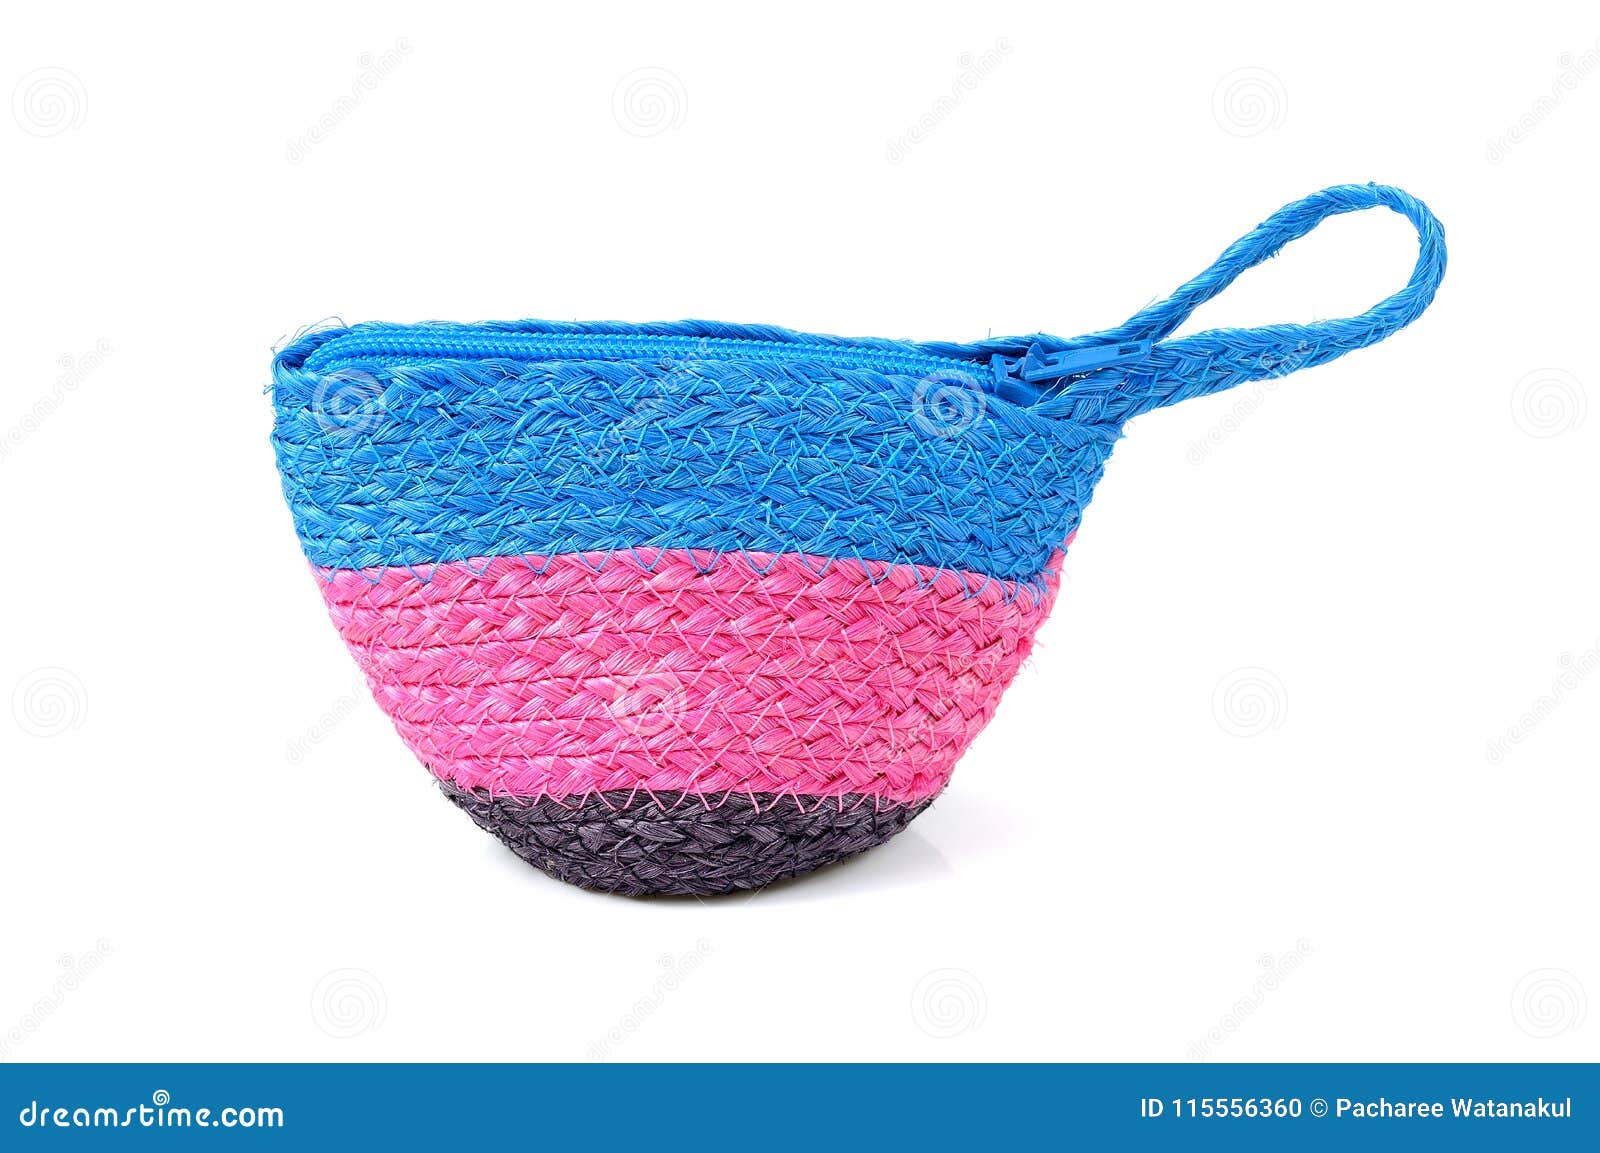 Beautiful Colorful Weave Handbag on White Background. Stock Photo ...